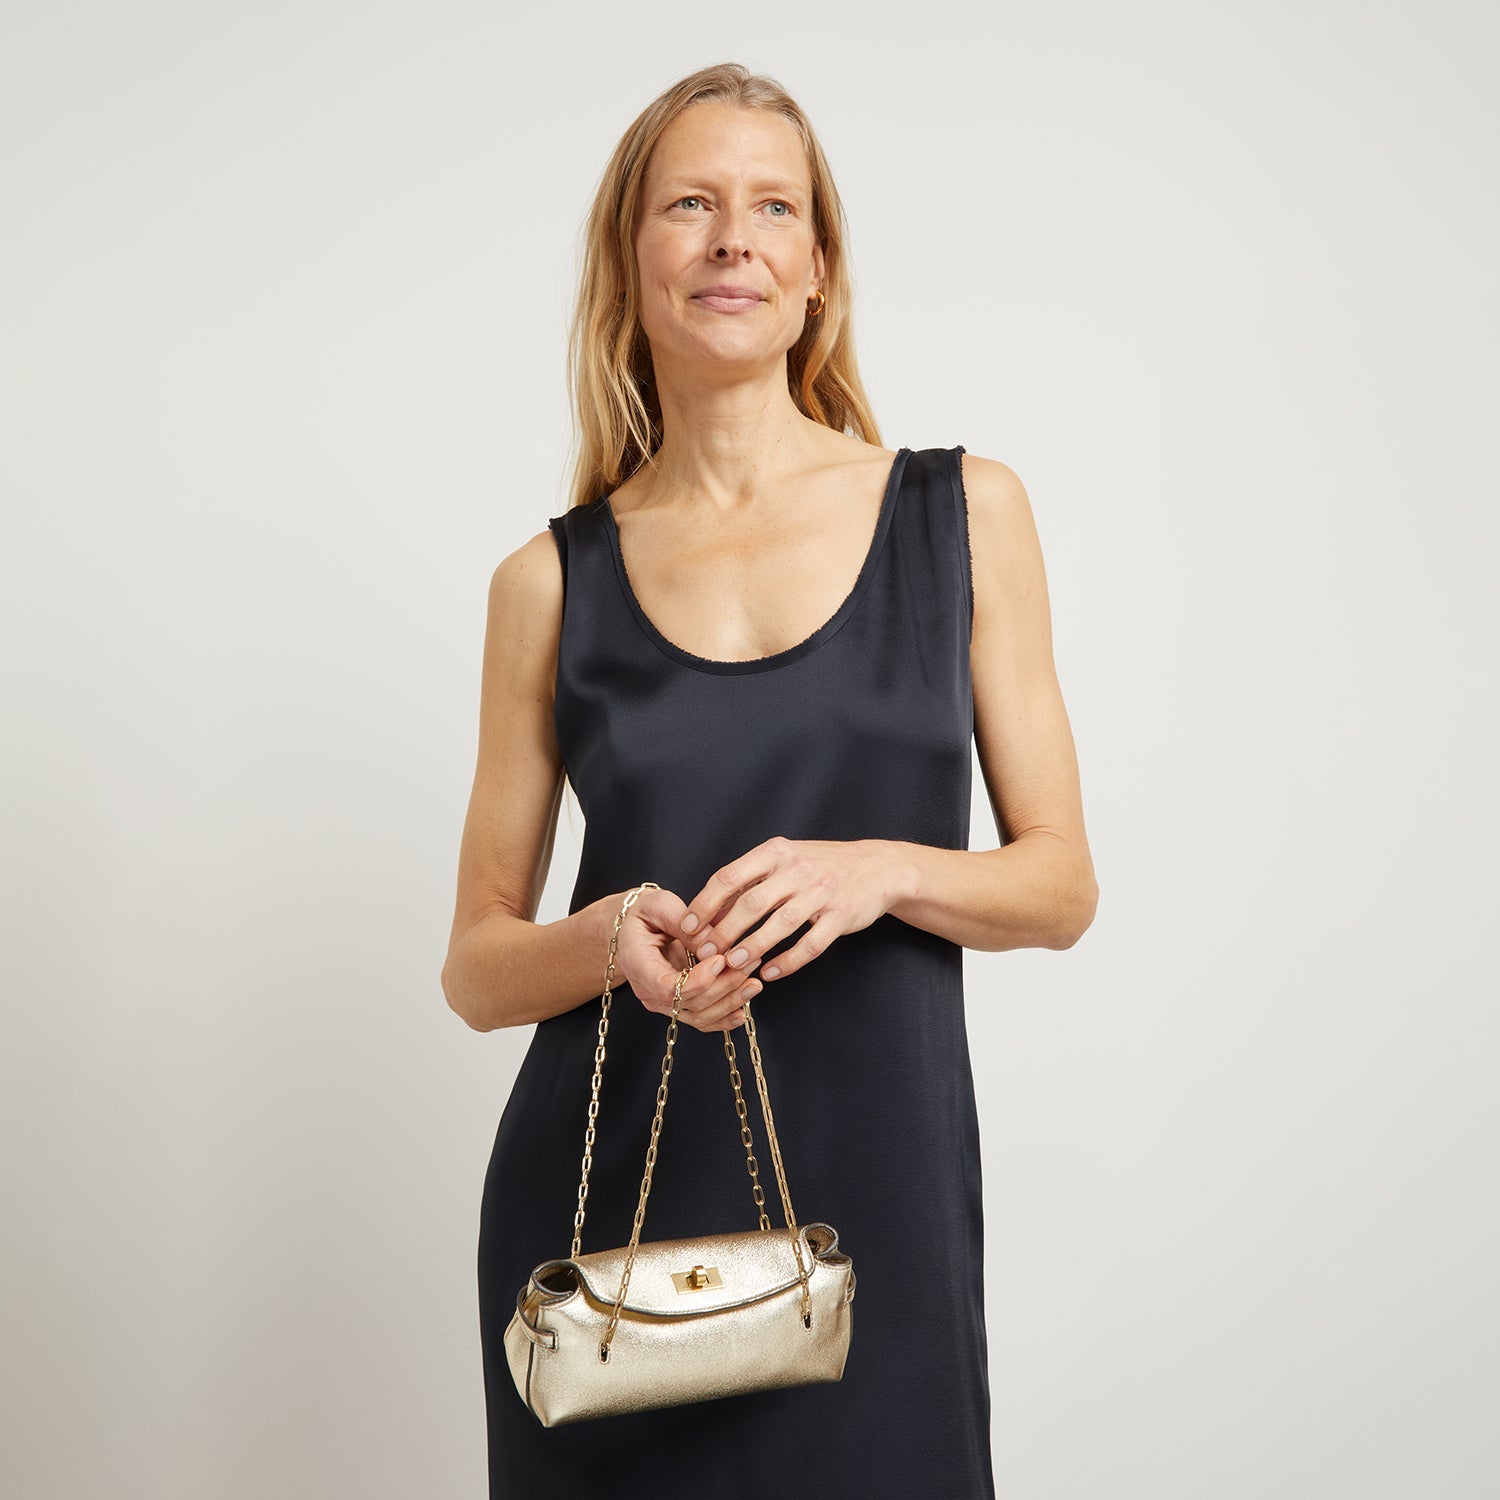 Waverley Shoulder Bag -

                  
                    Nappa Leather in Gold -
                  

                  Anya Hindmarch EU
